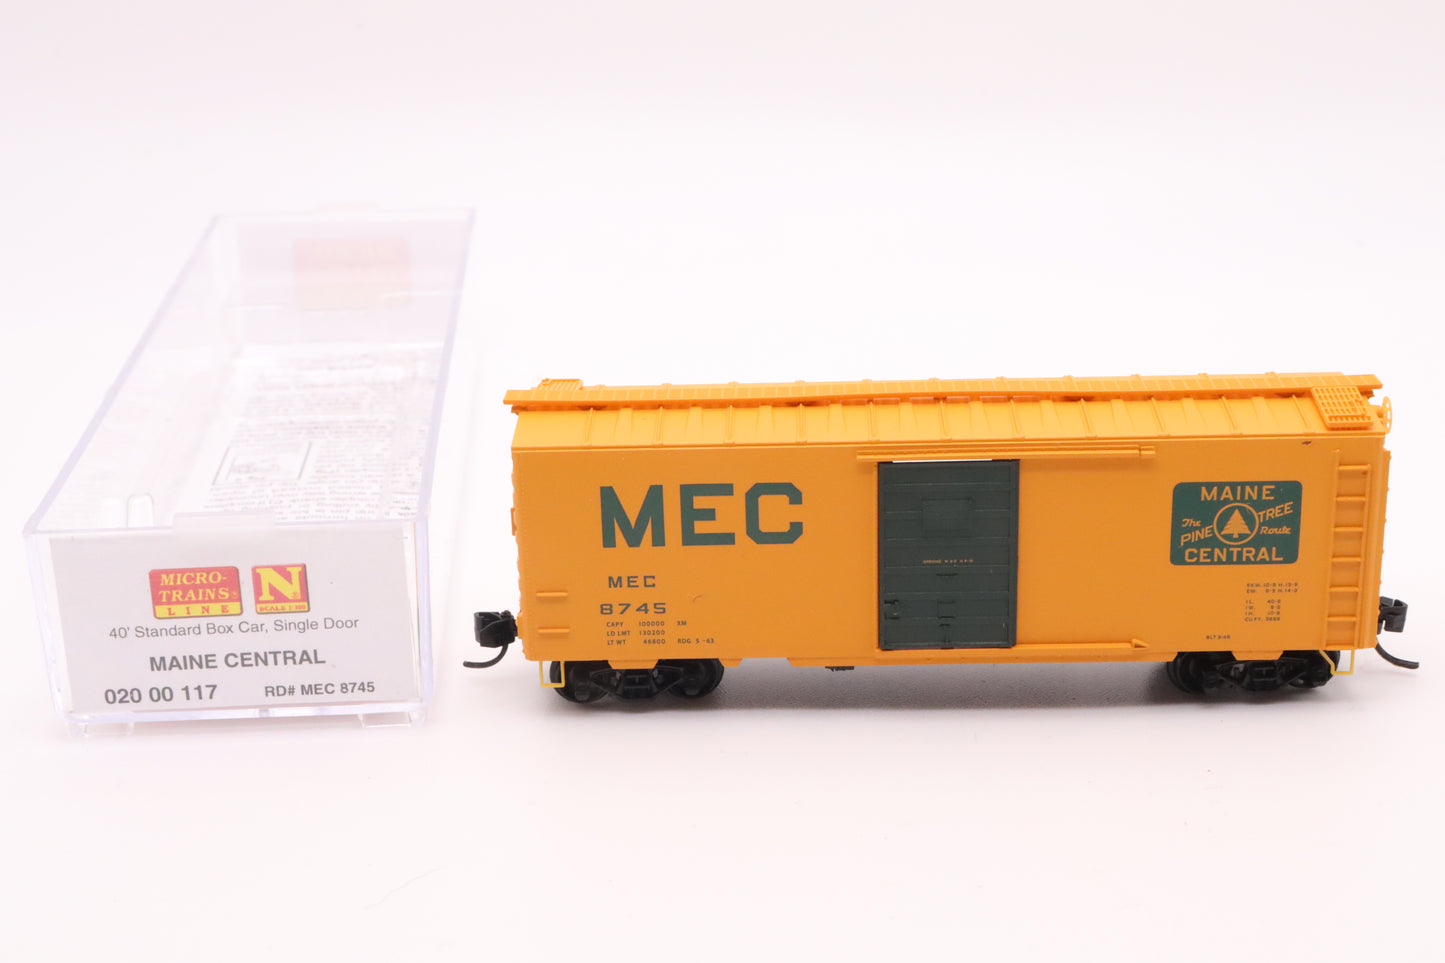 MTL-020 00 117 - 40' Standard Boxcar, Single Door - Maine Central - MEC #8745